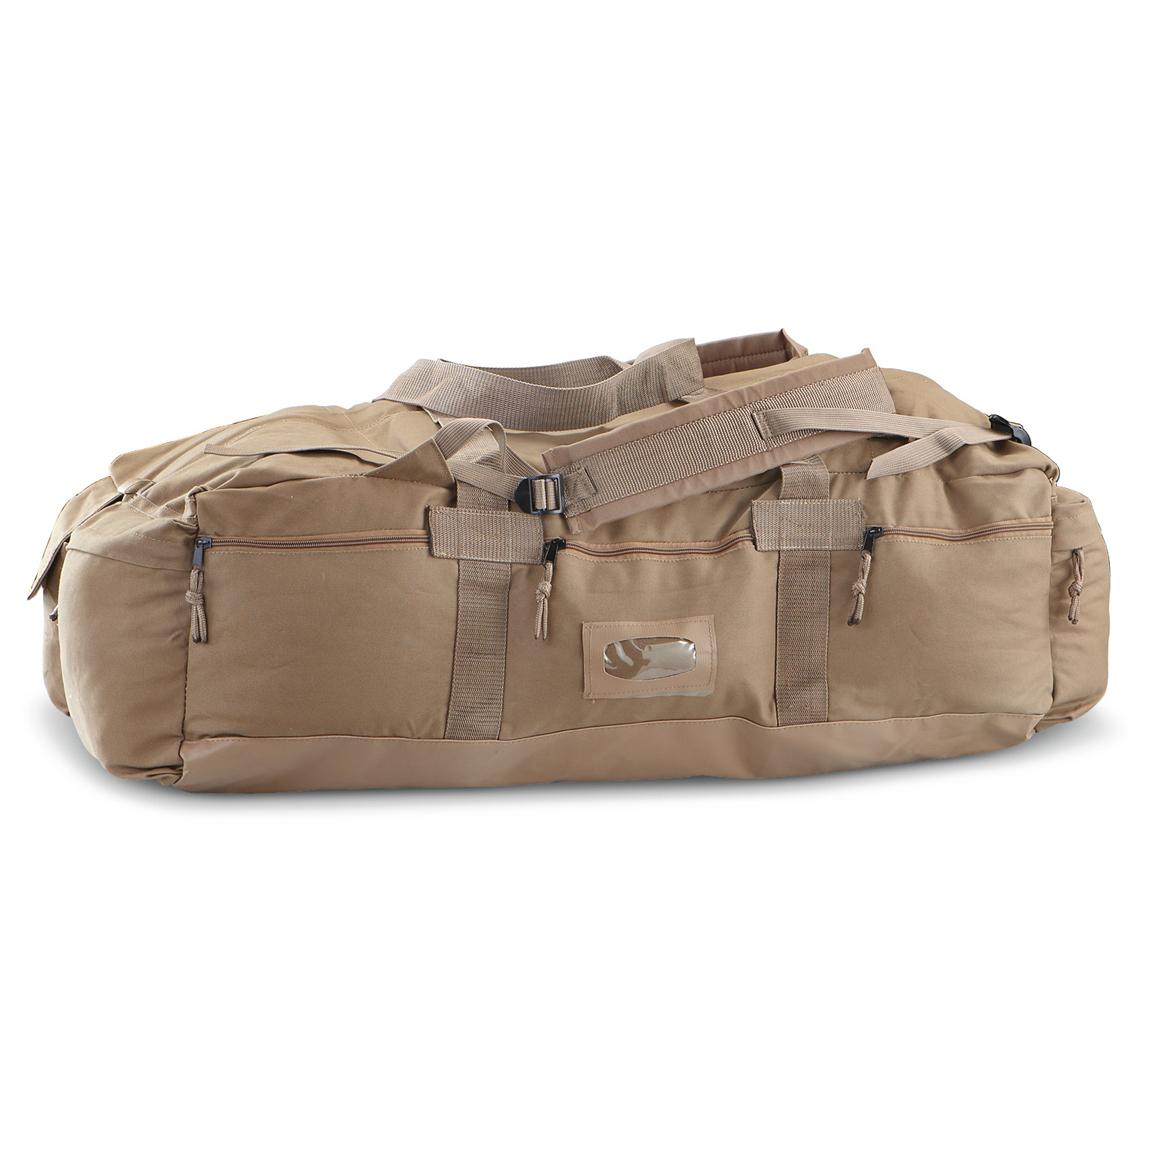 Military - style Israeli Mossad Tactical Duffel Bag / Backpack, Coyote - 223824, Tactical ...